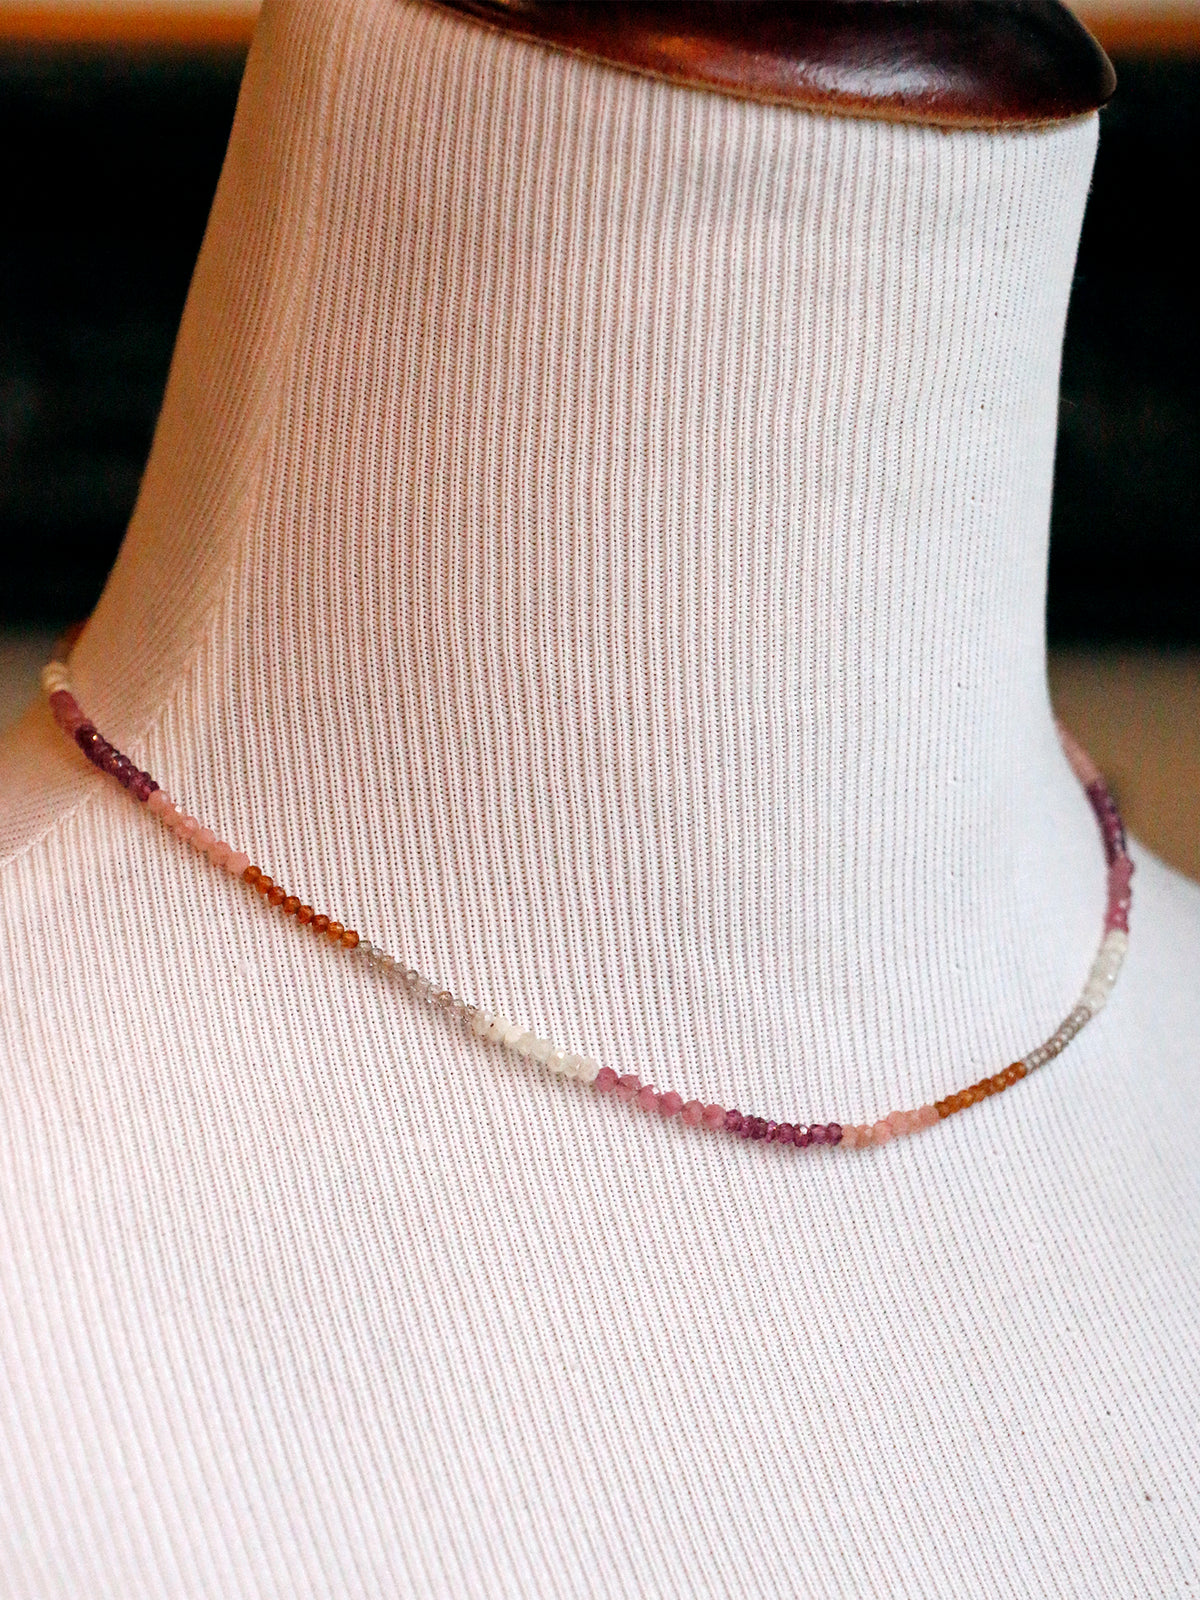 Susan Rifkin Pink Sapphire + Moonstone Beaded Necklace